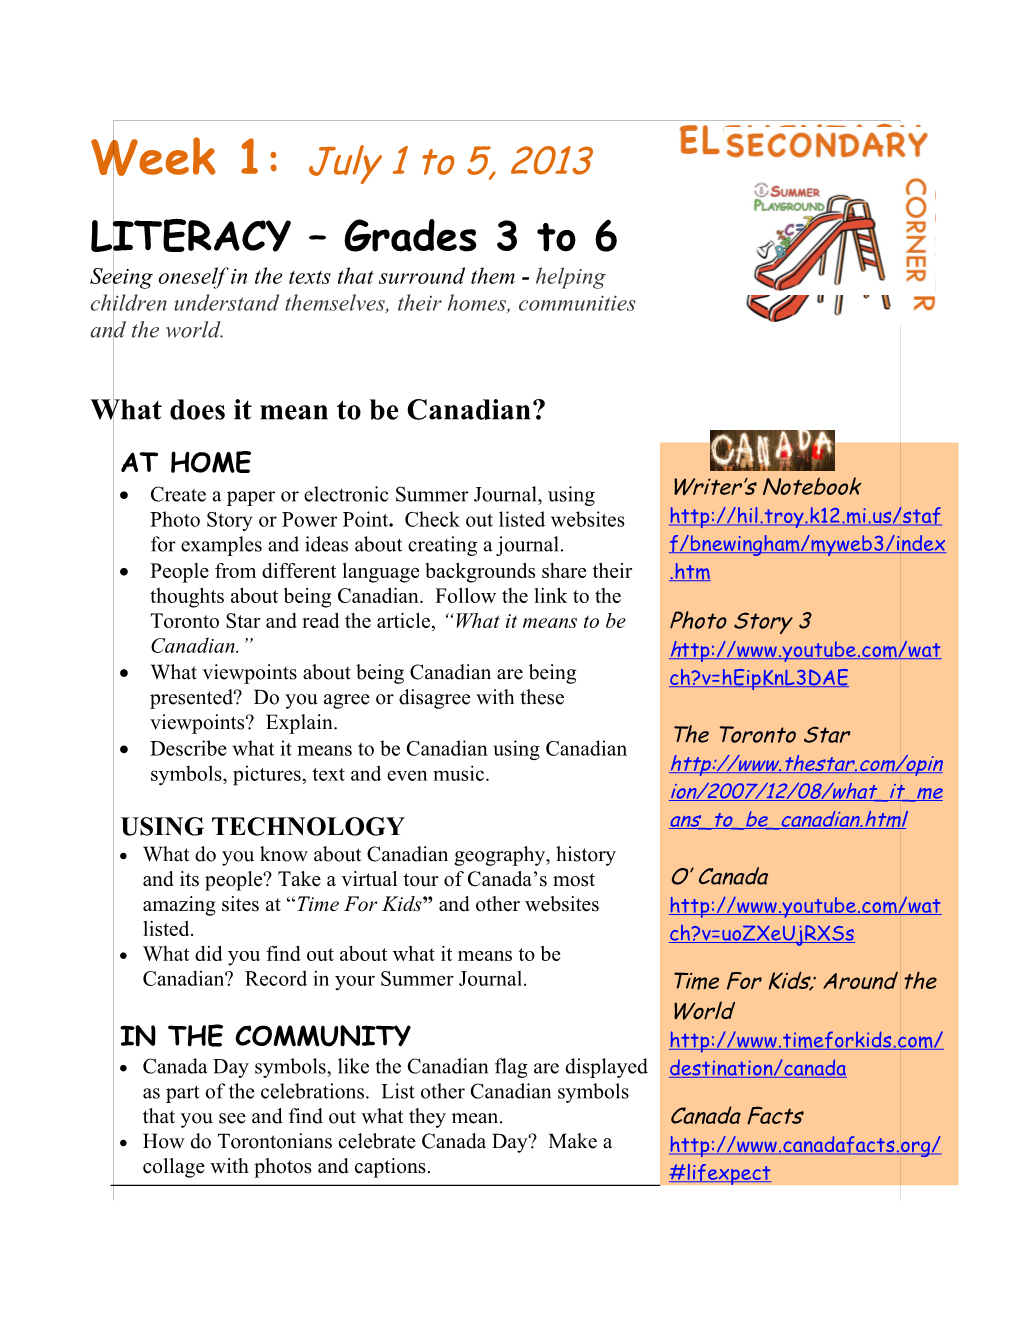 LITERACY Grades 3 to 6